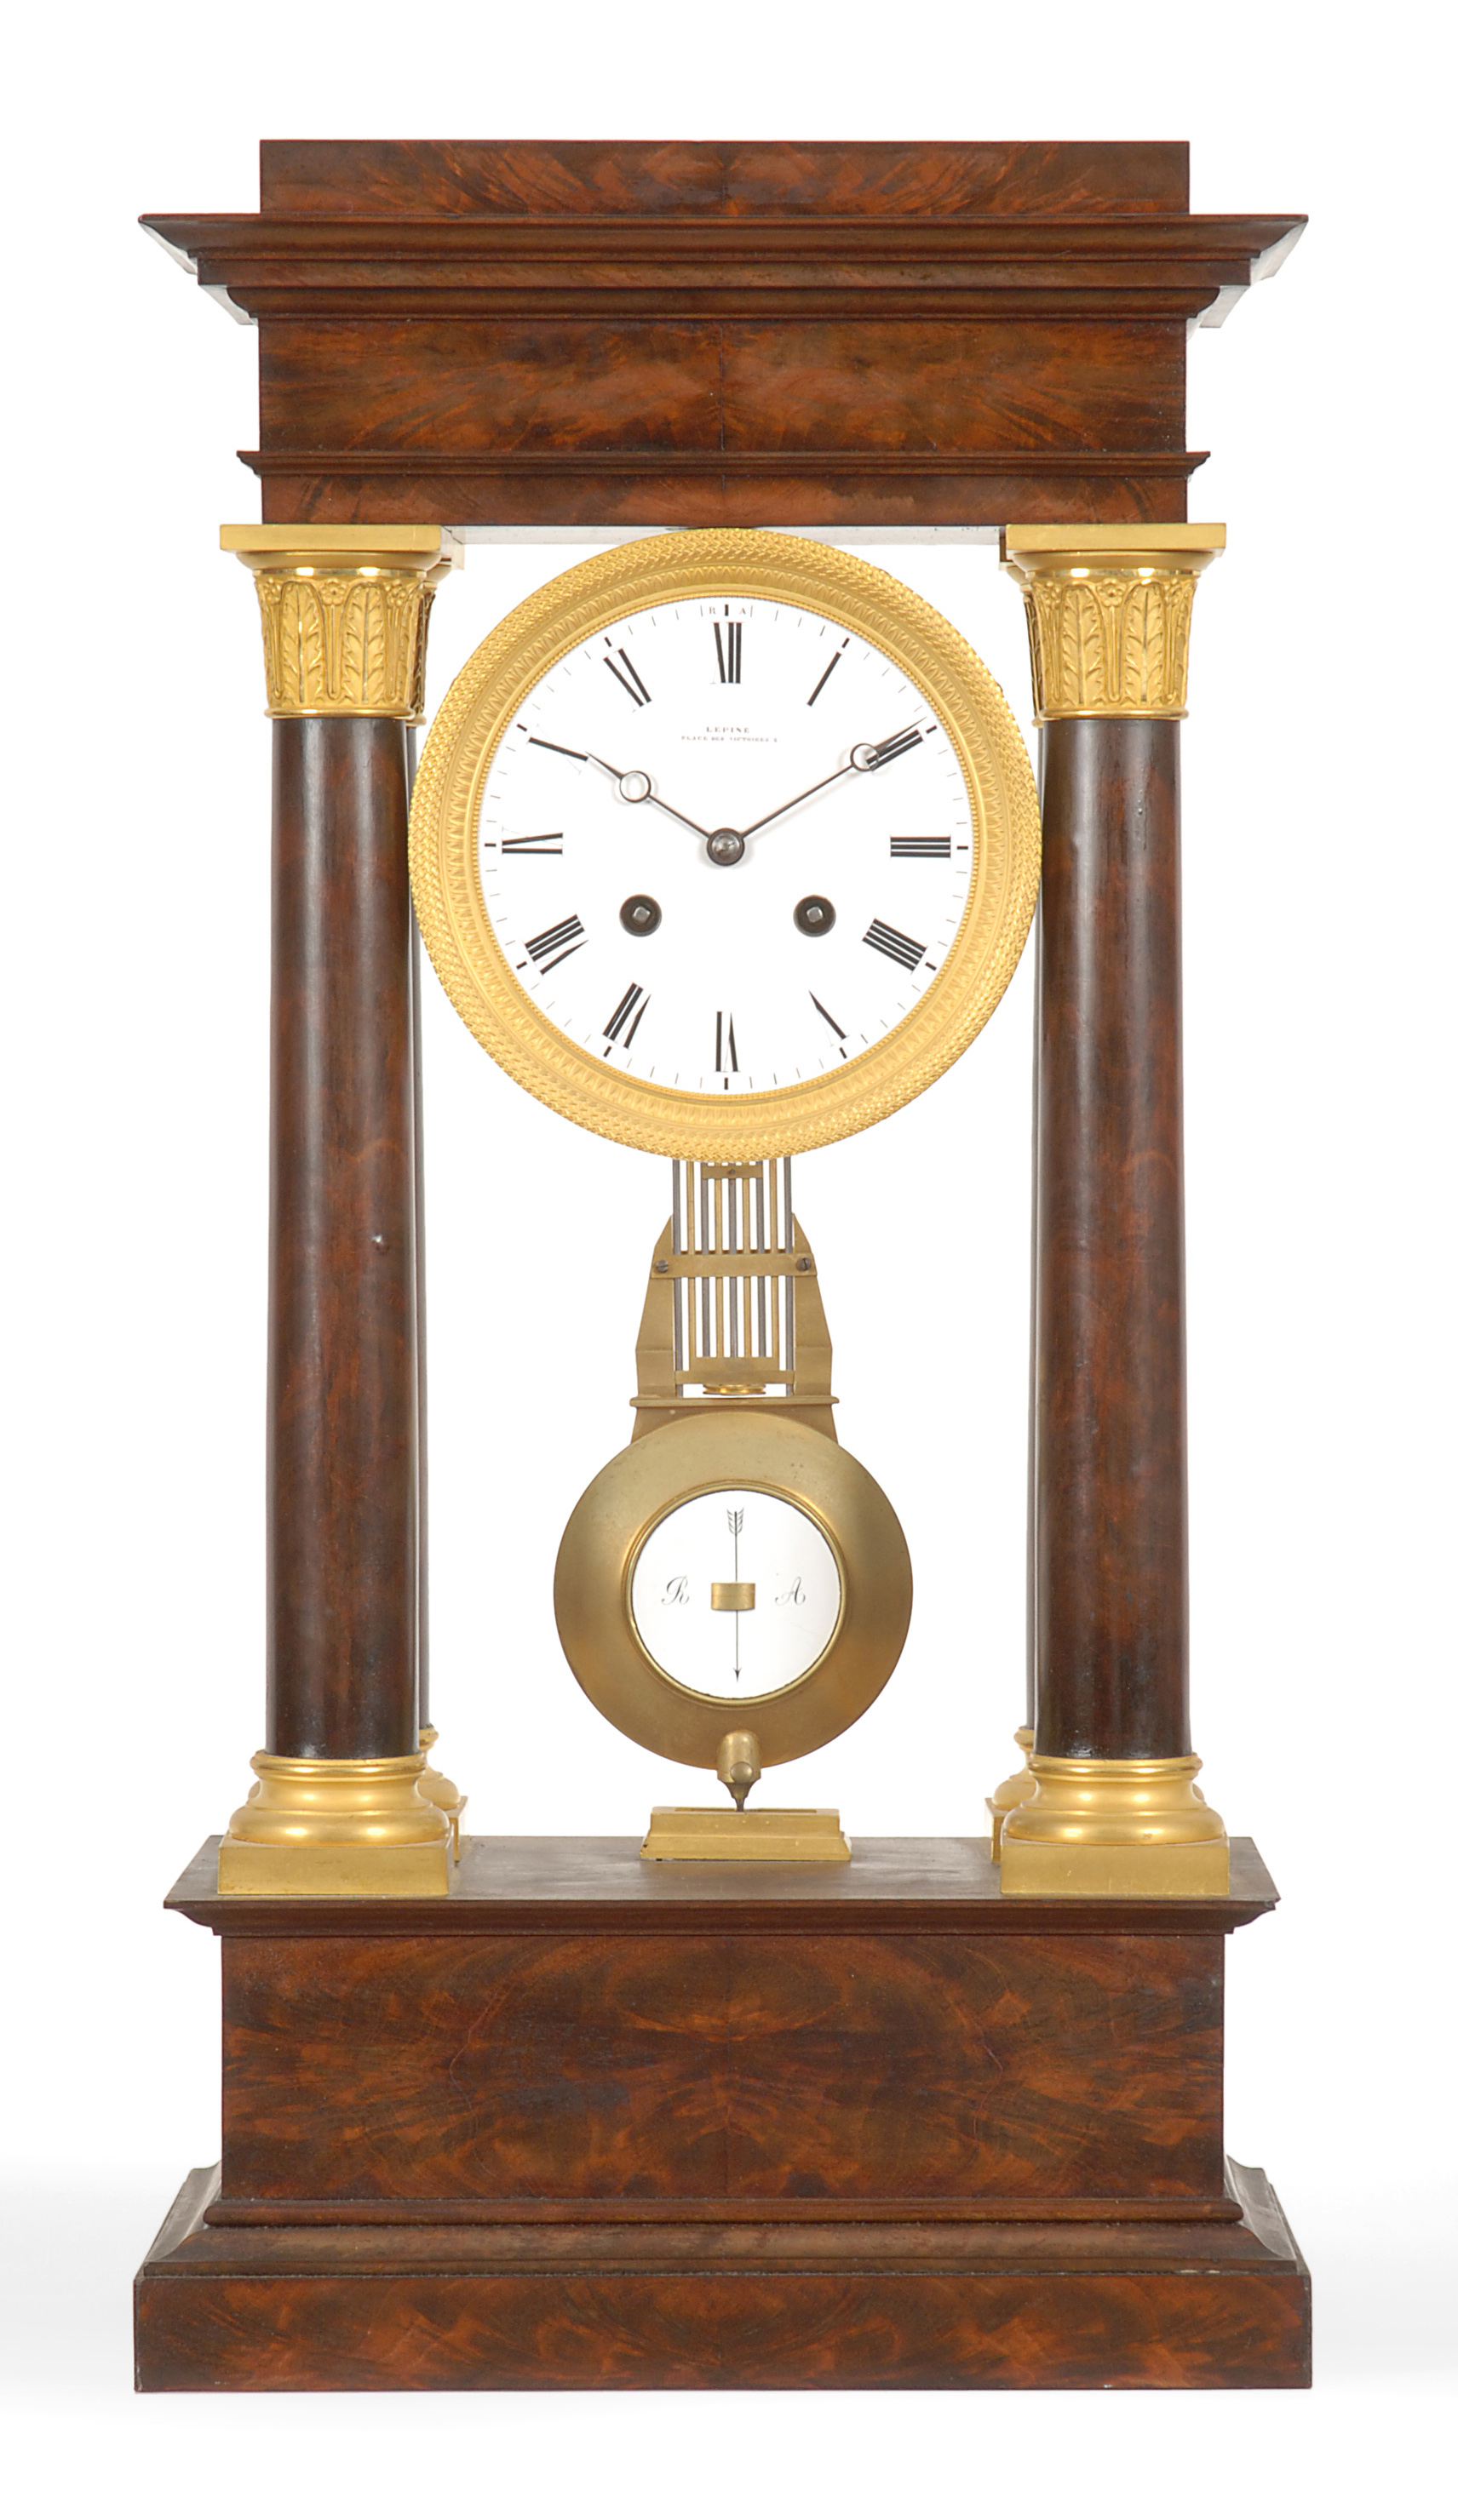 A handsome French classical mahogany and ormolu mounted shelf clock, by Lépine, Paris, third quarter of the 19th Century